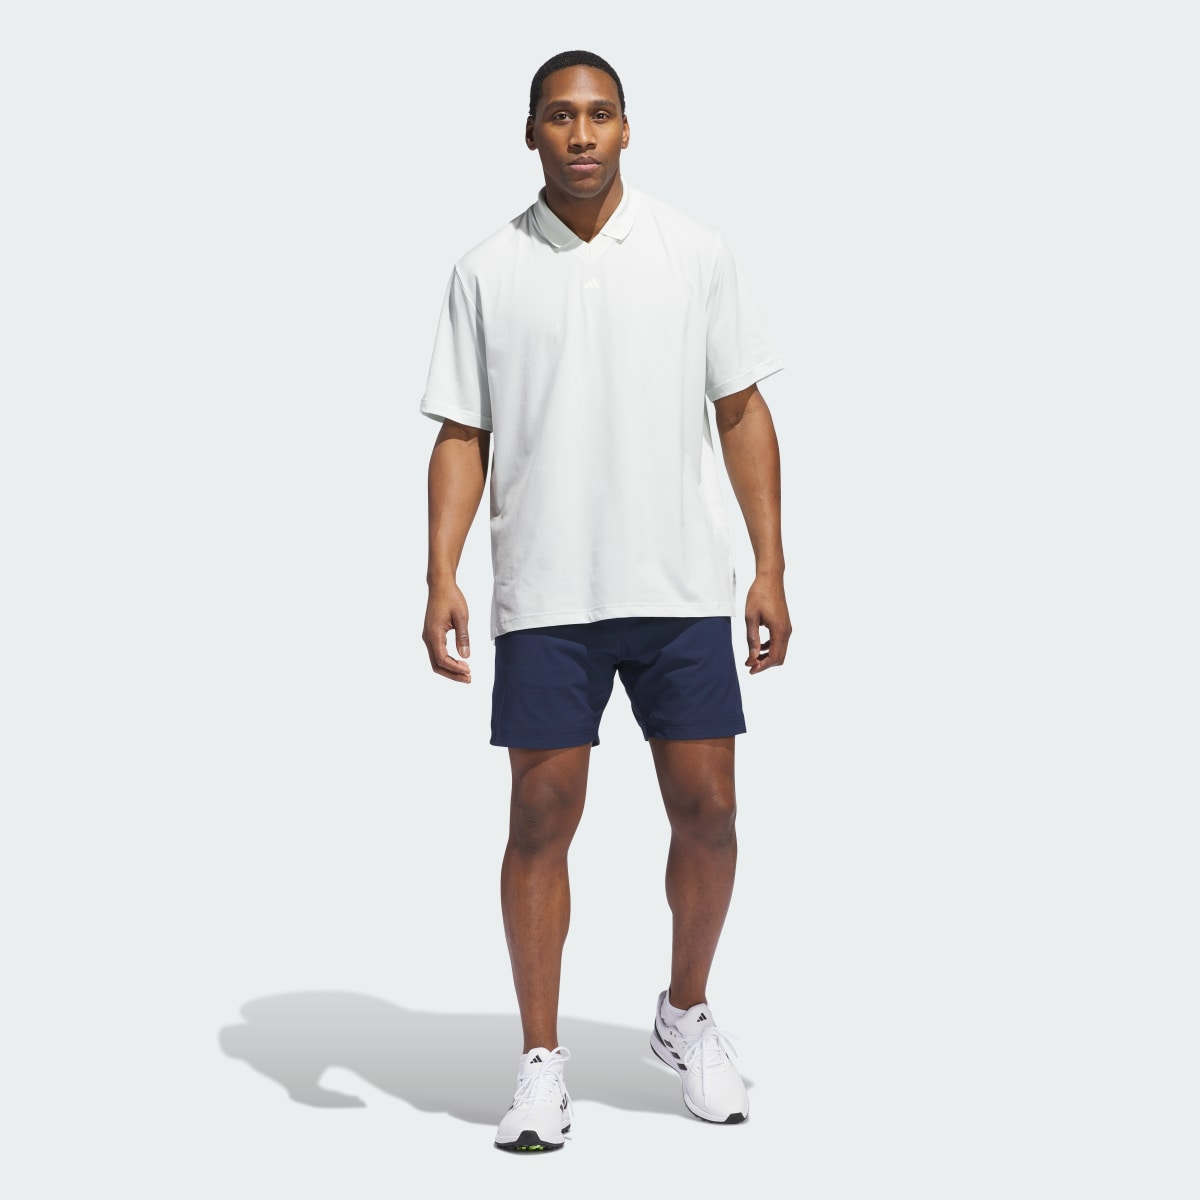 Adidas Ultimate365 Twistknit Piqué Polo Shirt. 6